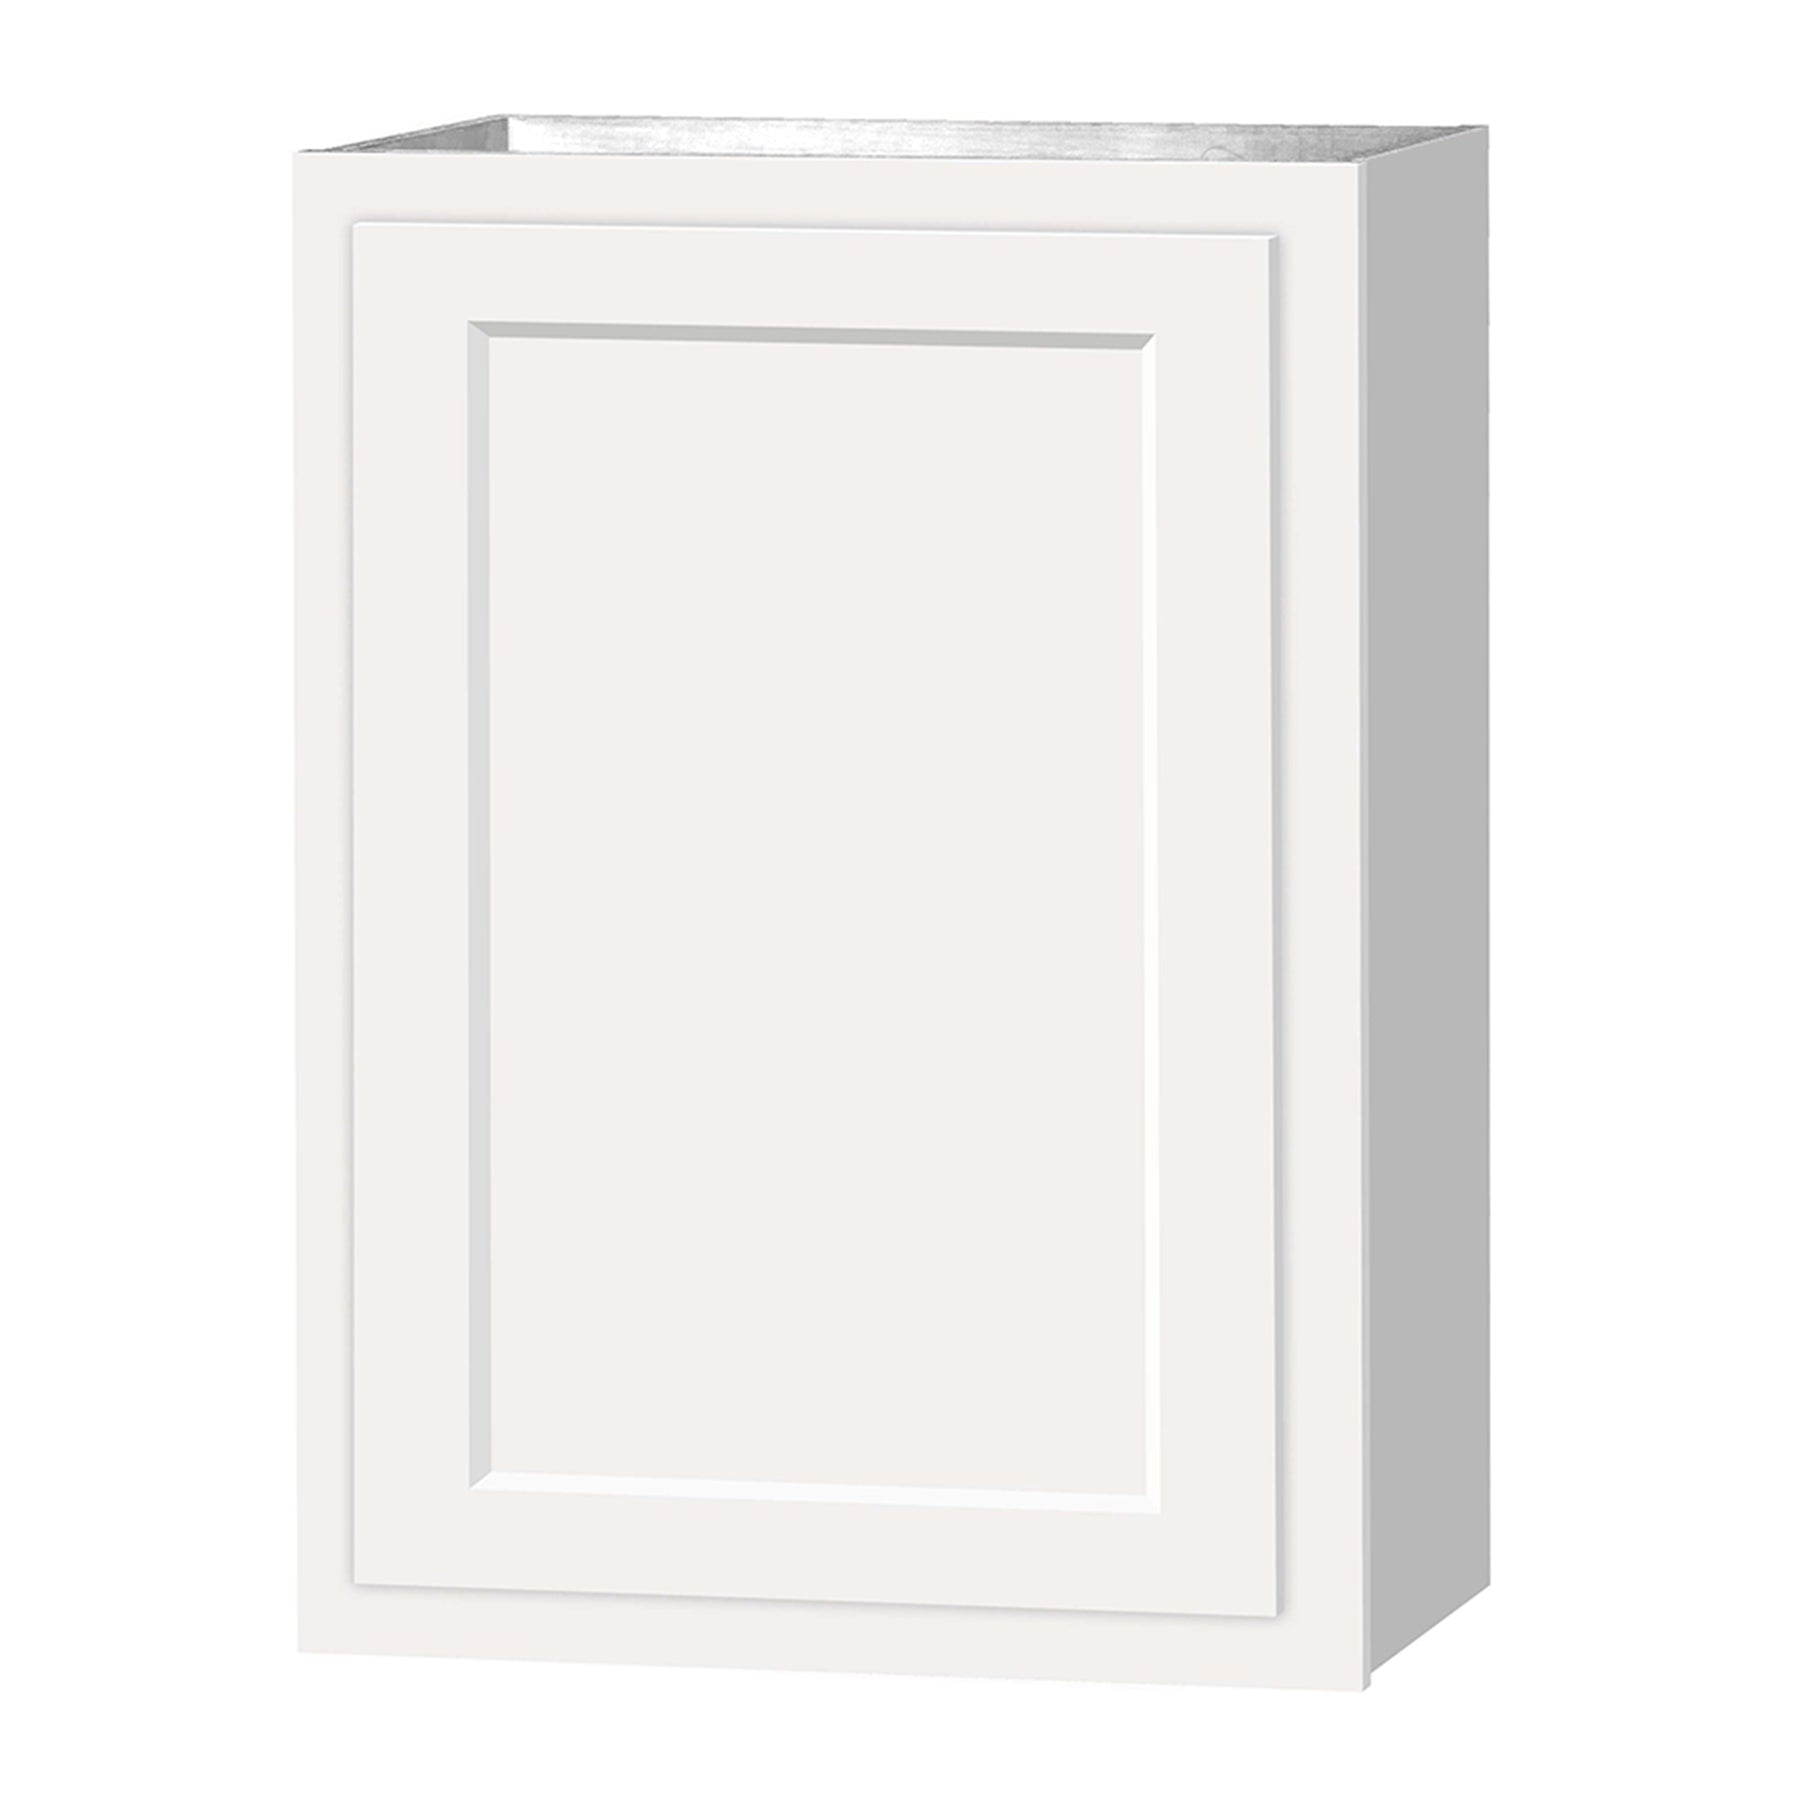 30 inch Wall Cabinets - Single Door - Dwhite Shaker - 21 Inch W x 30 Inch H x 12 Inch D